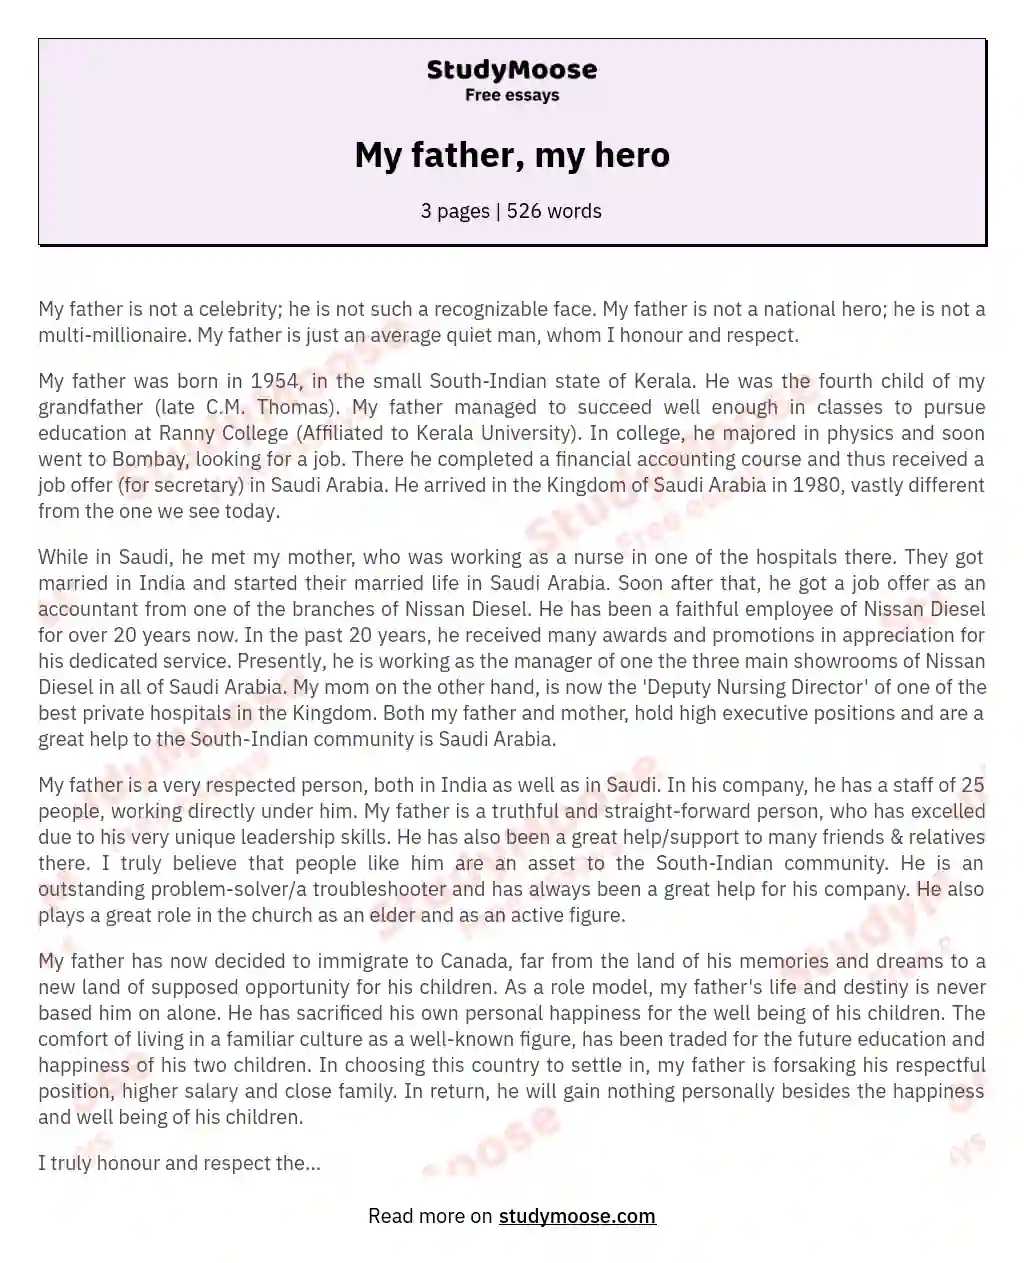 My father, my hero essay